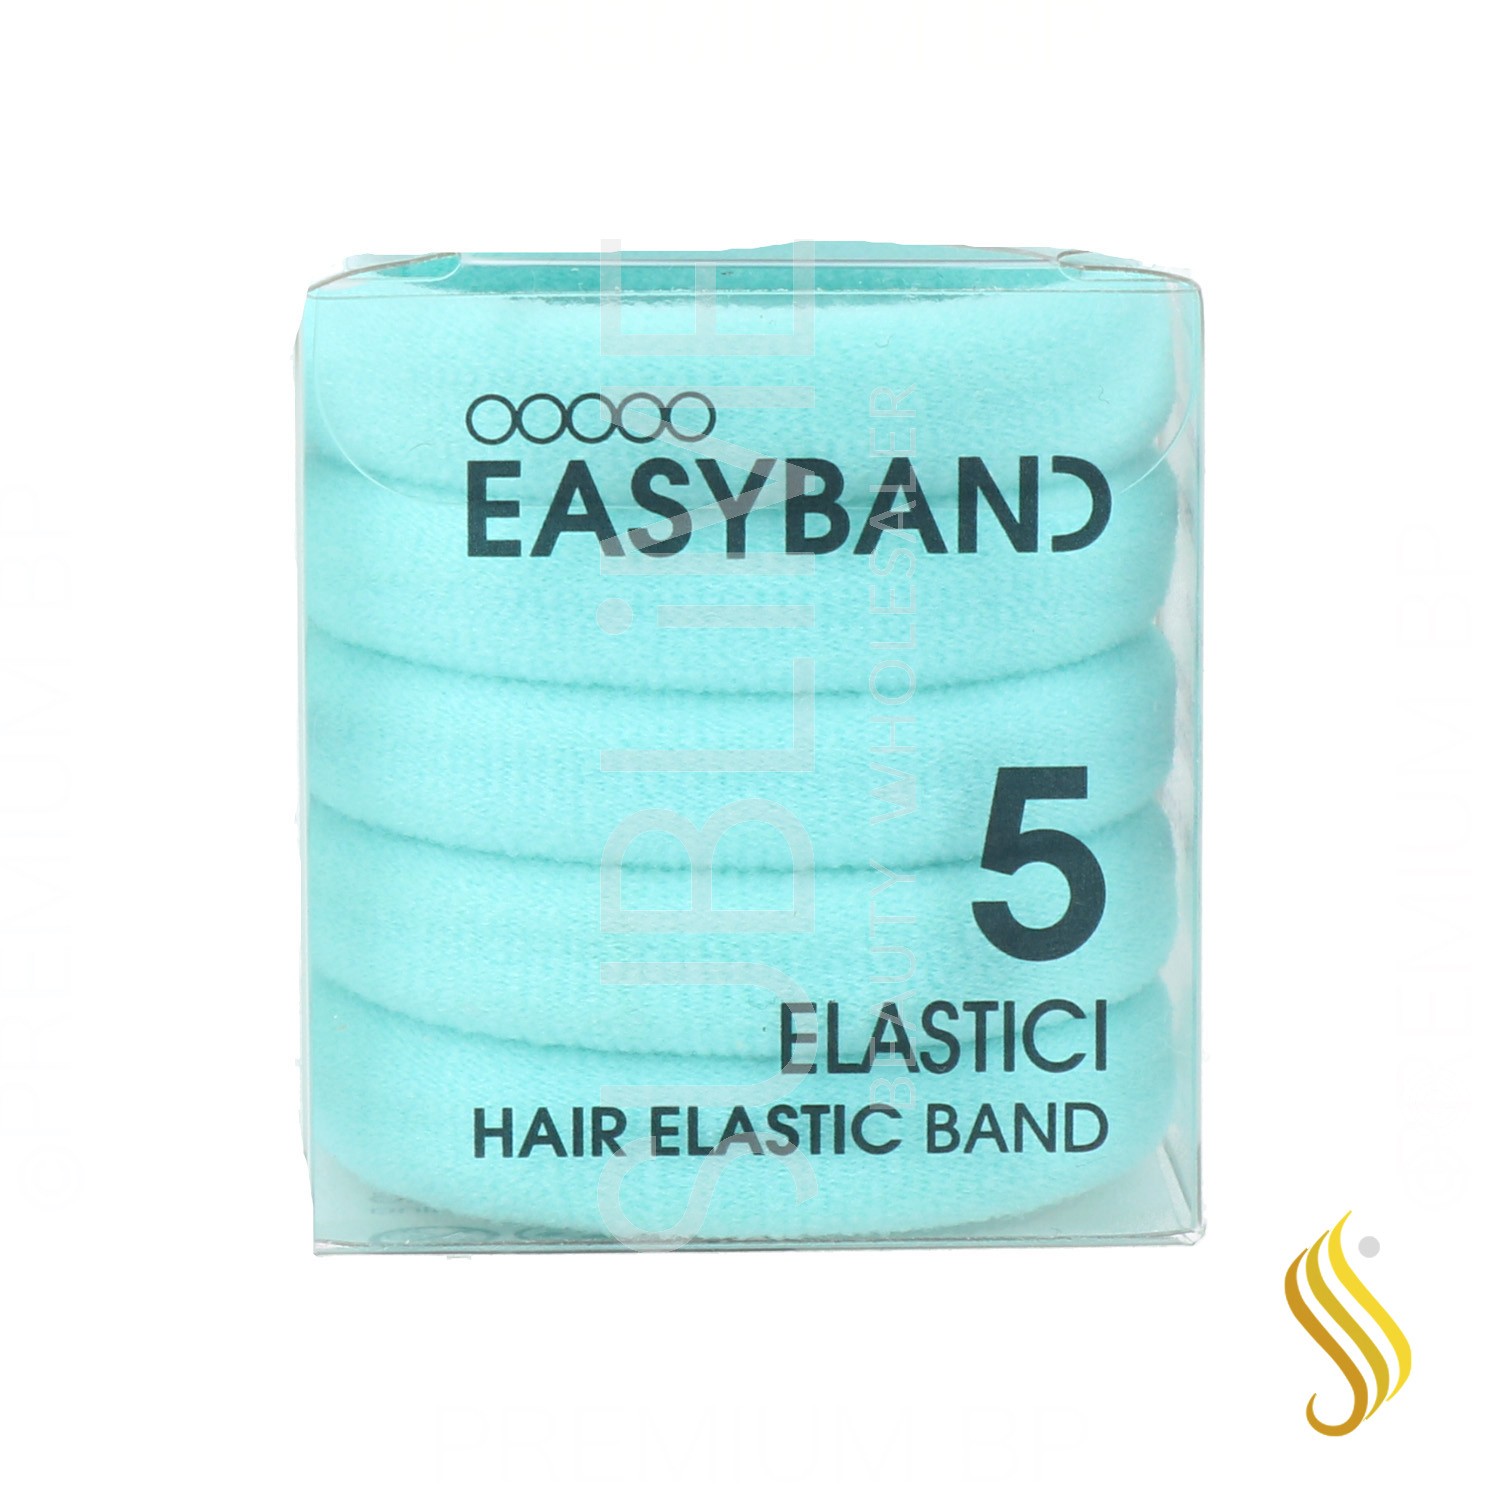 XAN PRO EASY BAND HAIR ELASTIC BAND 1X5U (COLETERO TURQUESA)